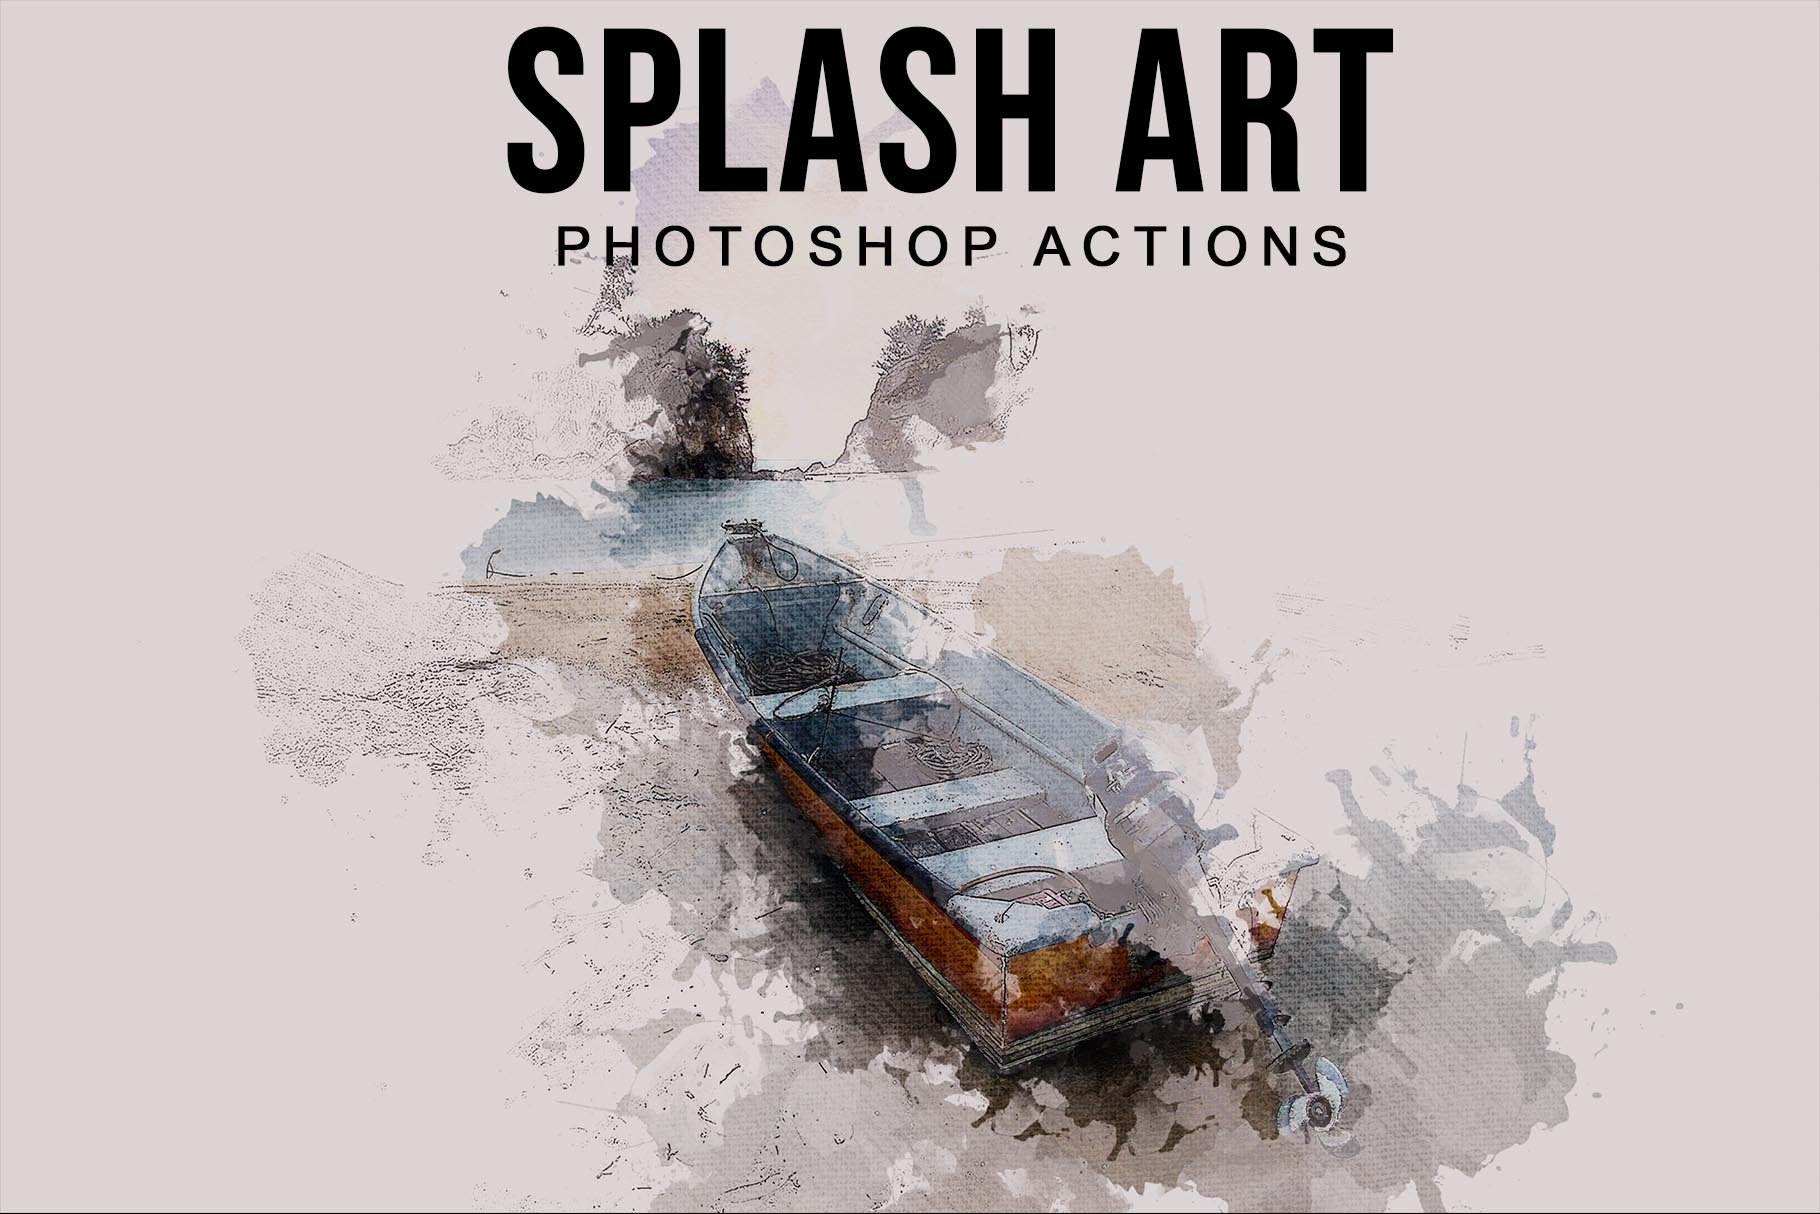 Splash Art Photoshop Actionscover image.